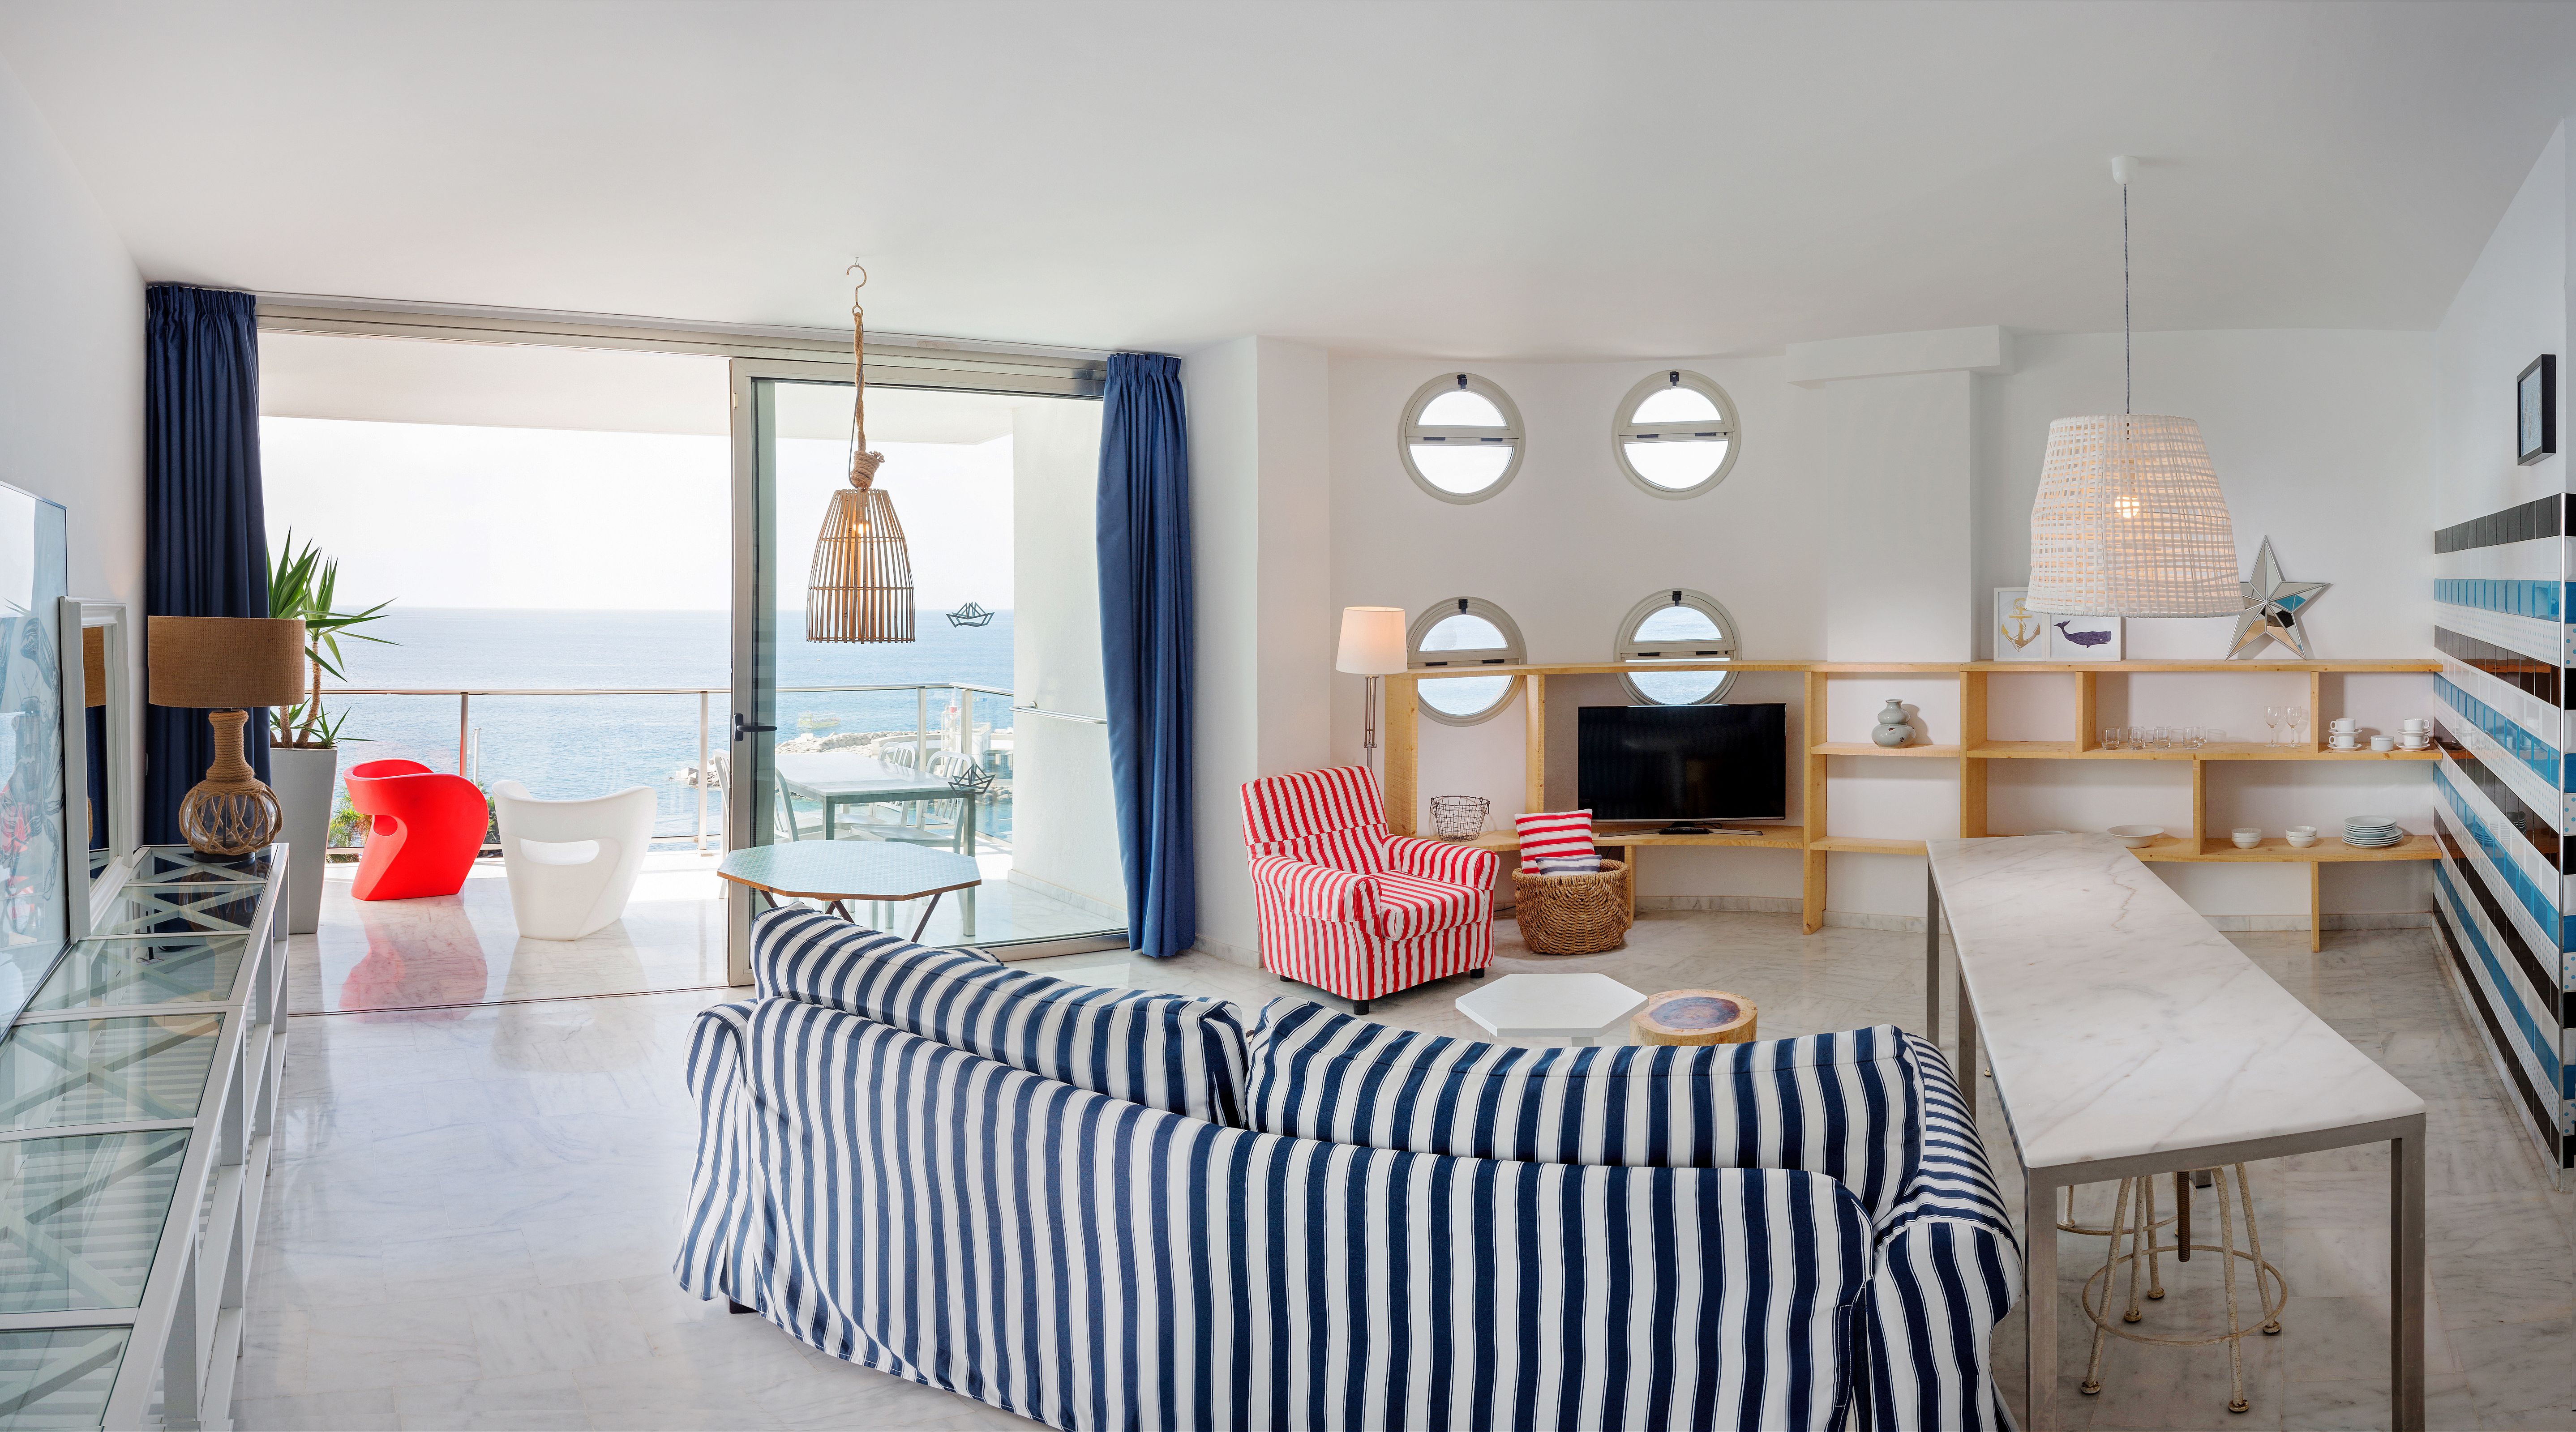 Carrera Elegancia mezcla Hotel Marina Suites en Canarias, Web Oficial